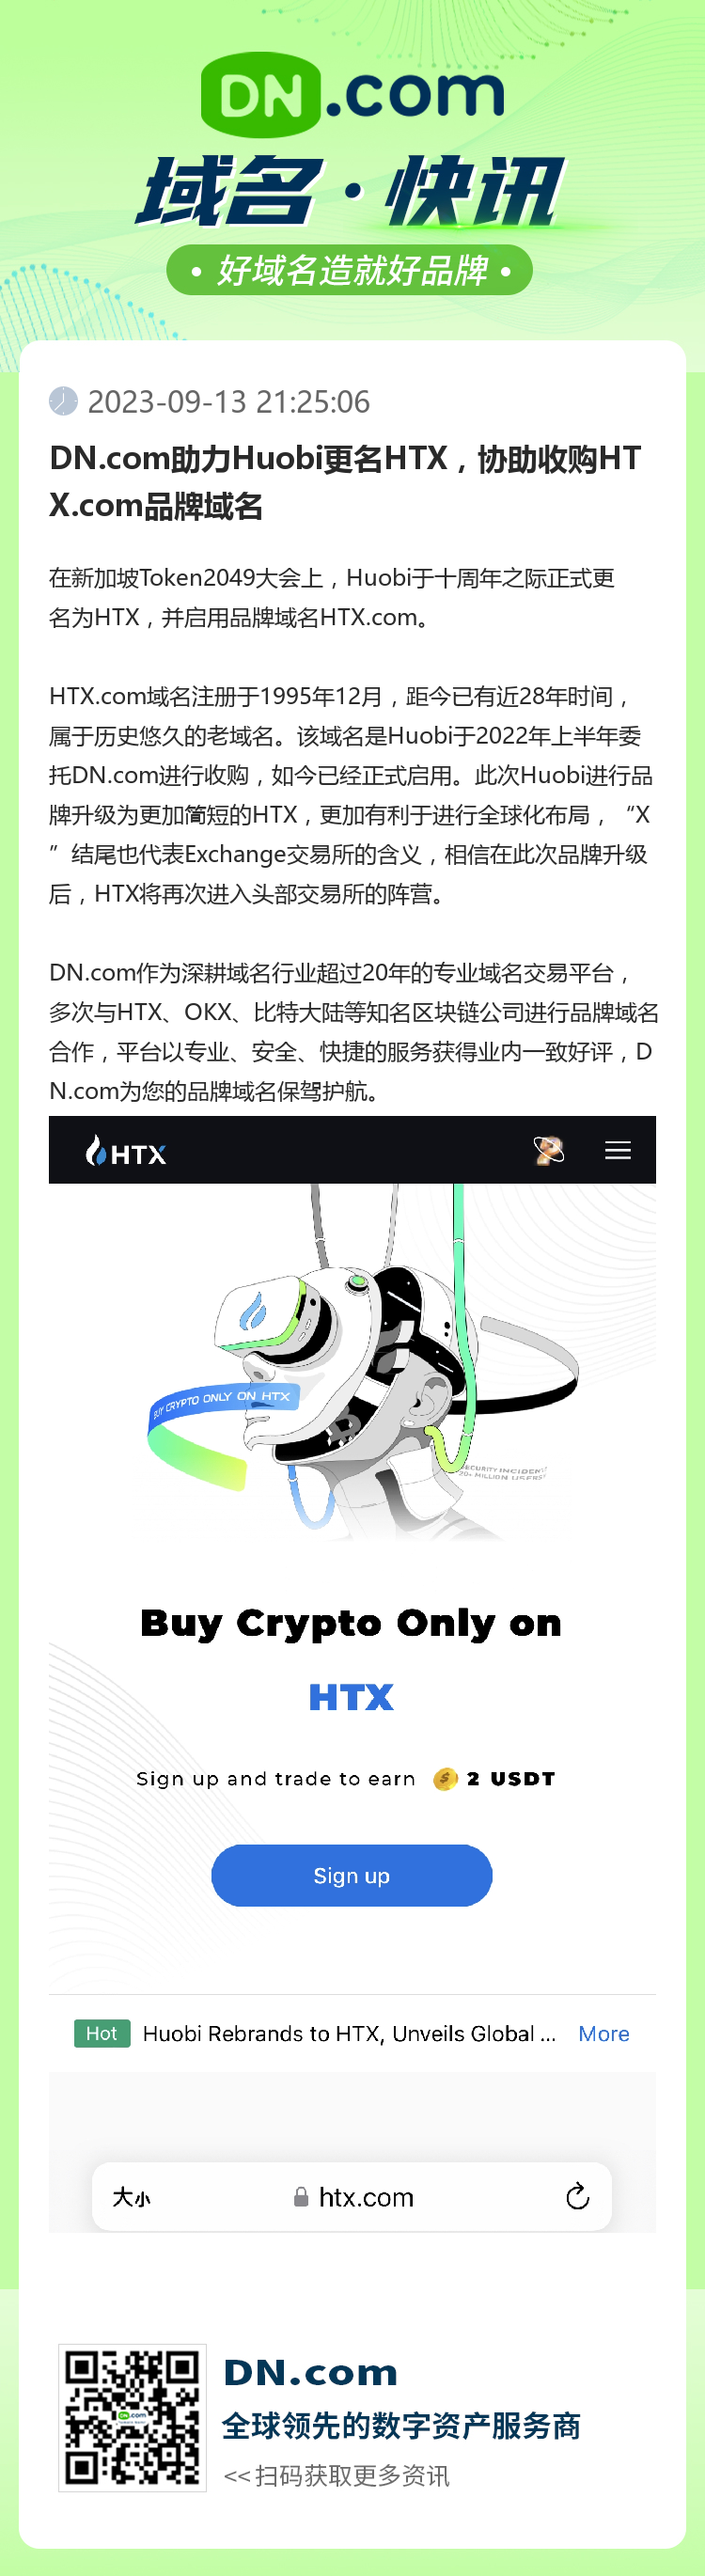 DN.com助力Huobi更名HTX，协助收购HTX.com品牌域名